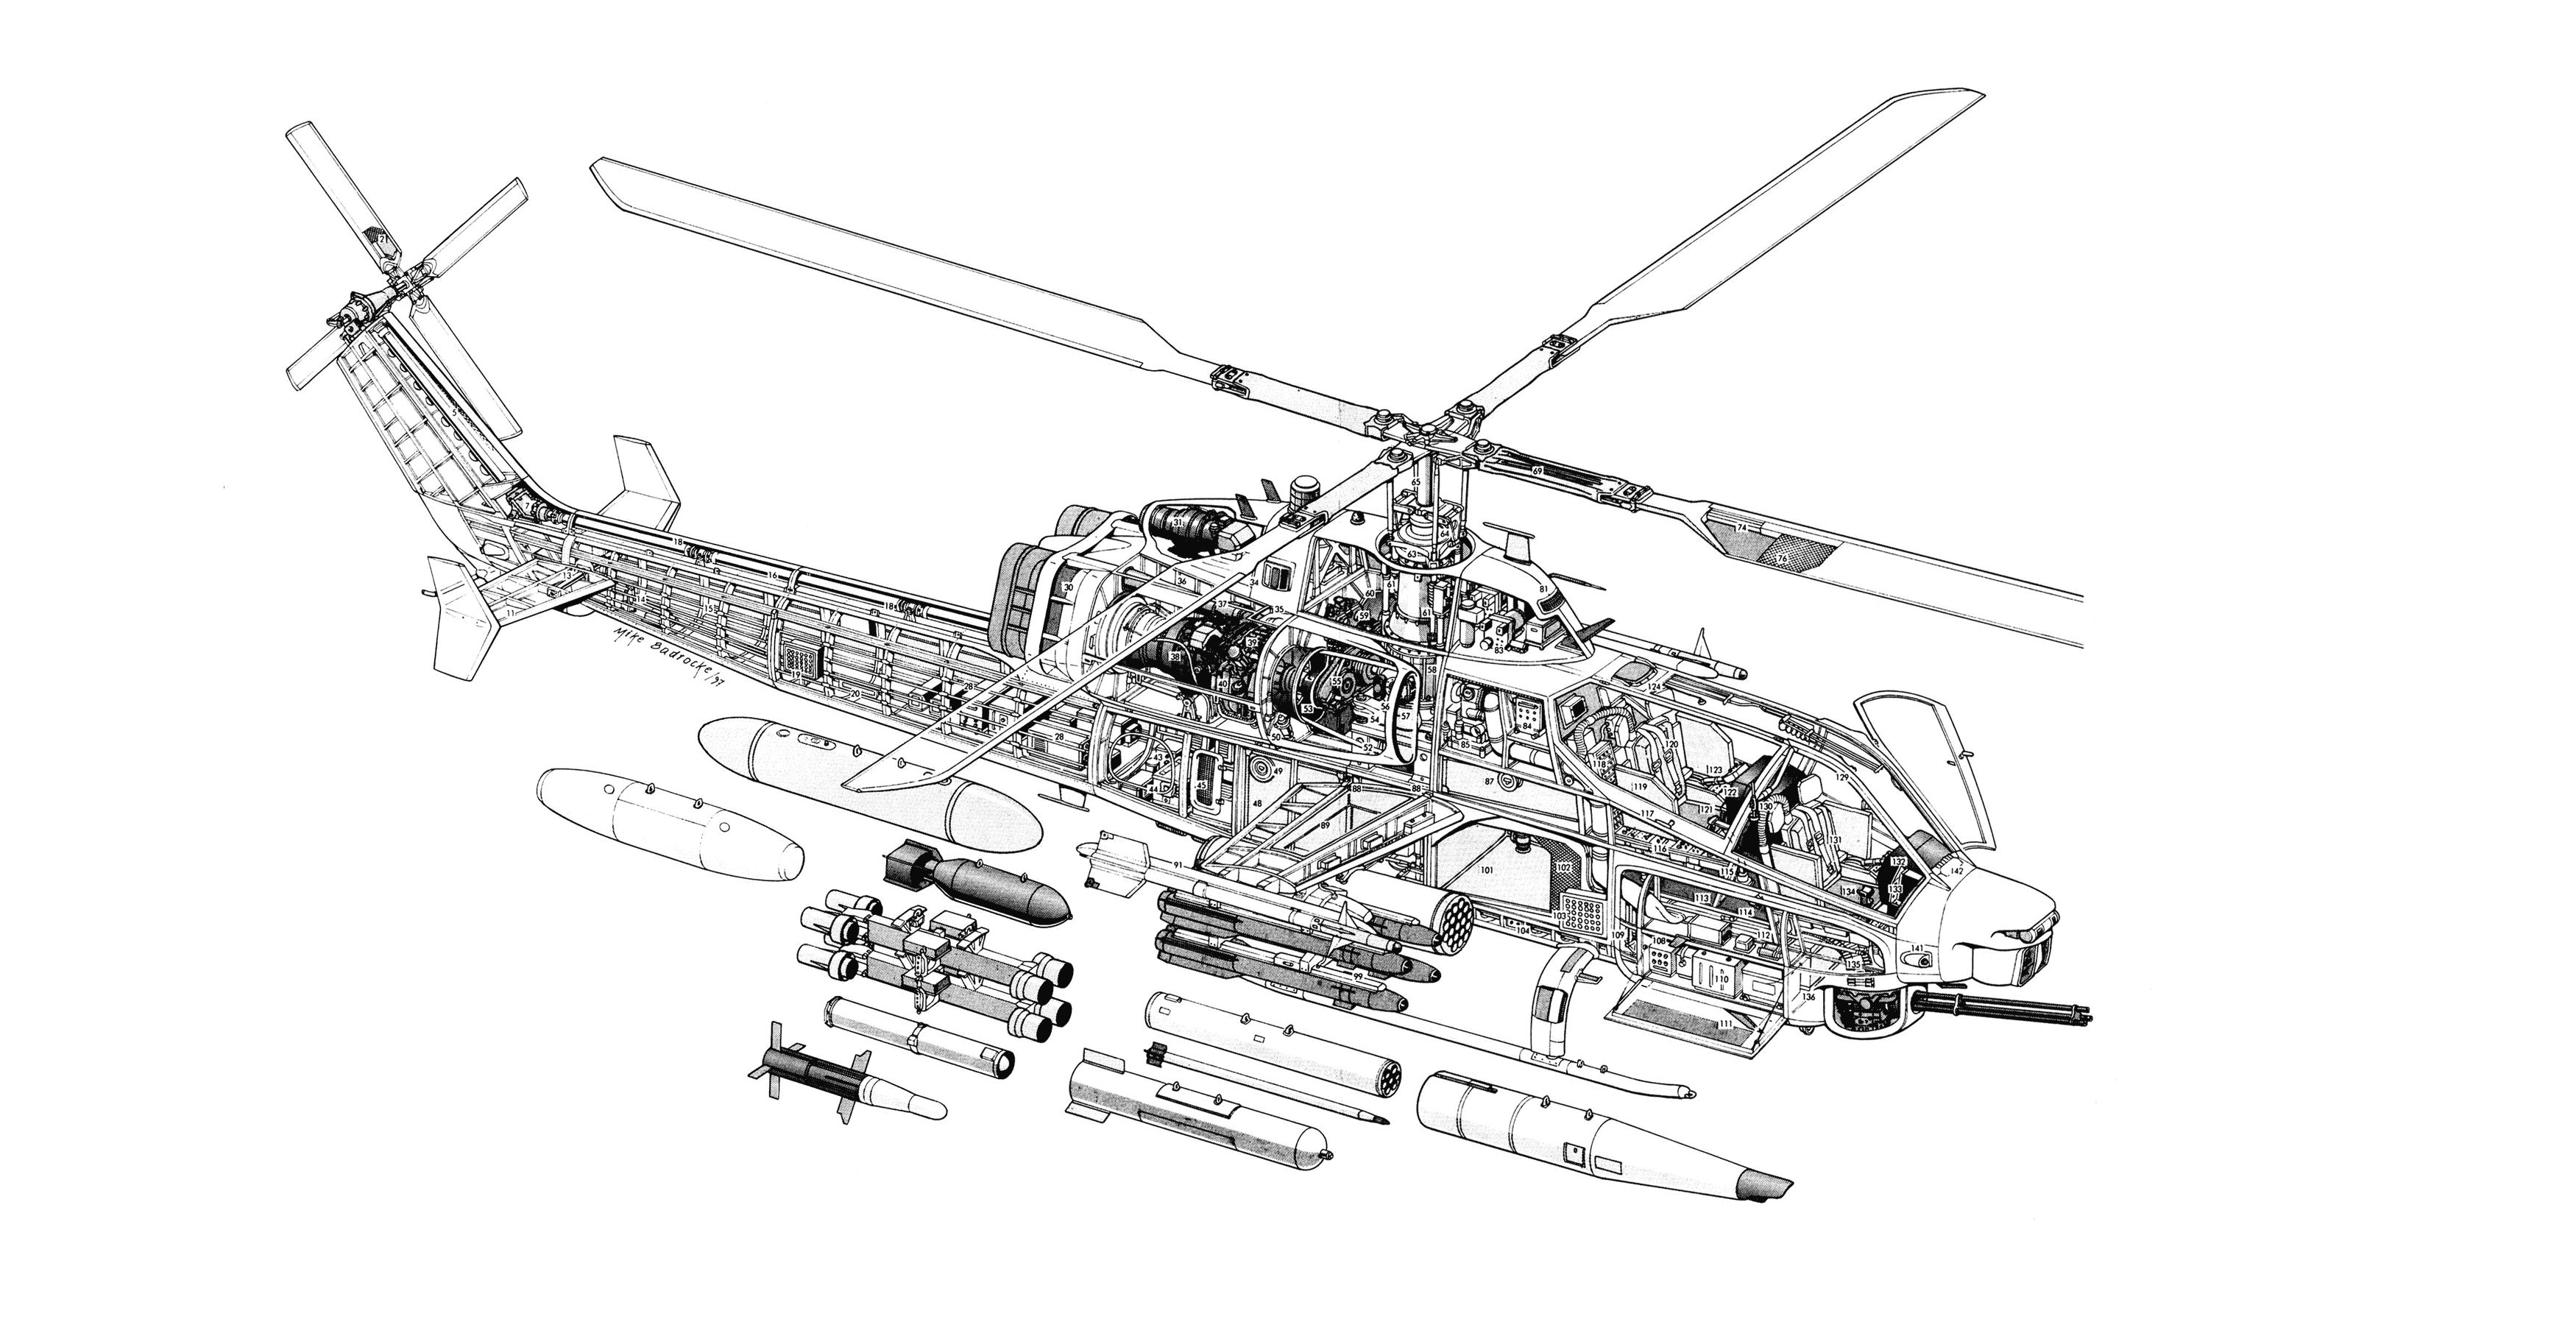 Bell AH-1 cutaway